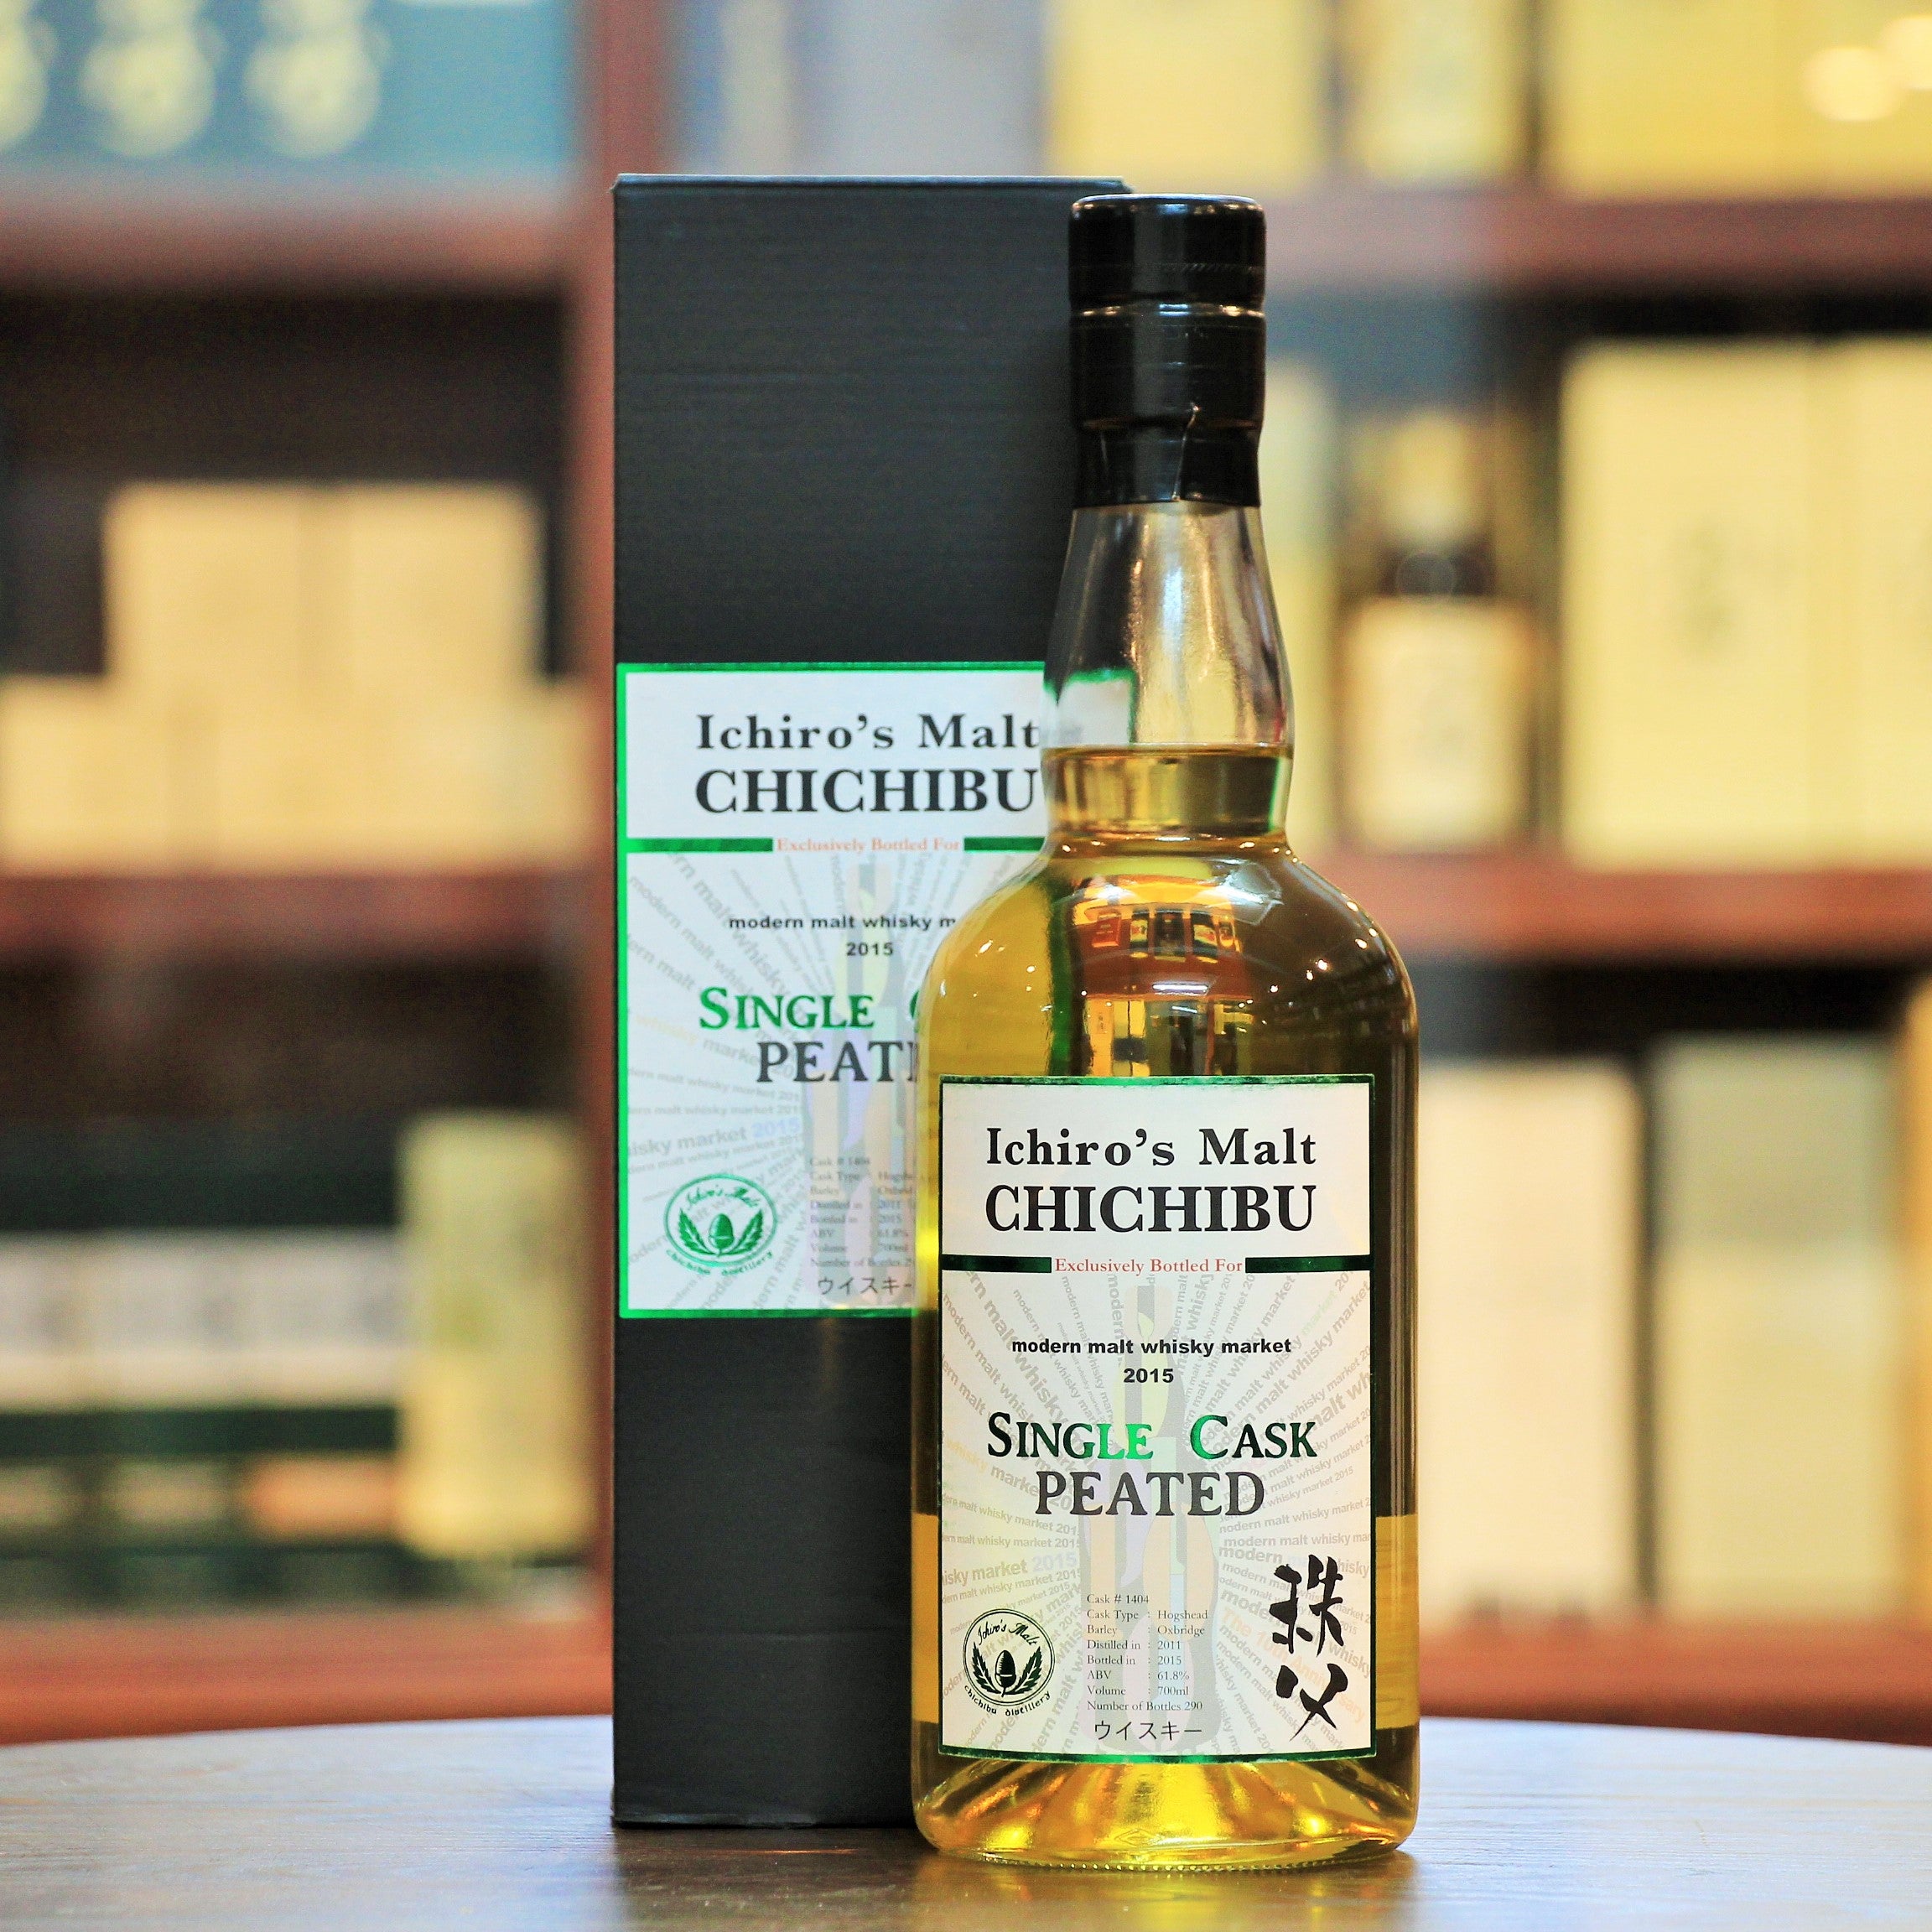 Ichiro's Malt Chichibu Modern Malt Whisky Market 2015 Peated Japanese Single Malt Whisky